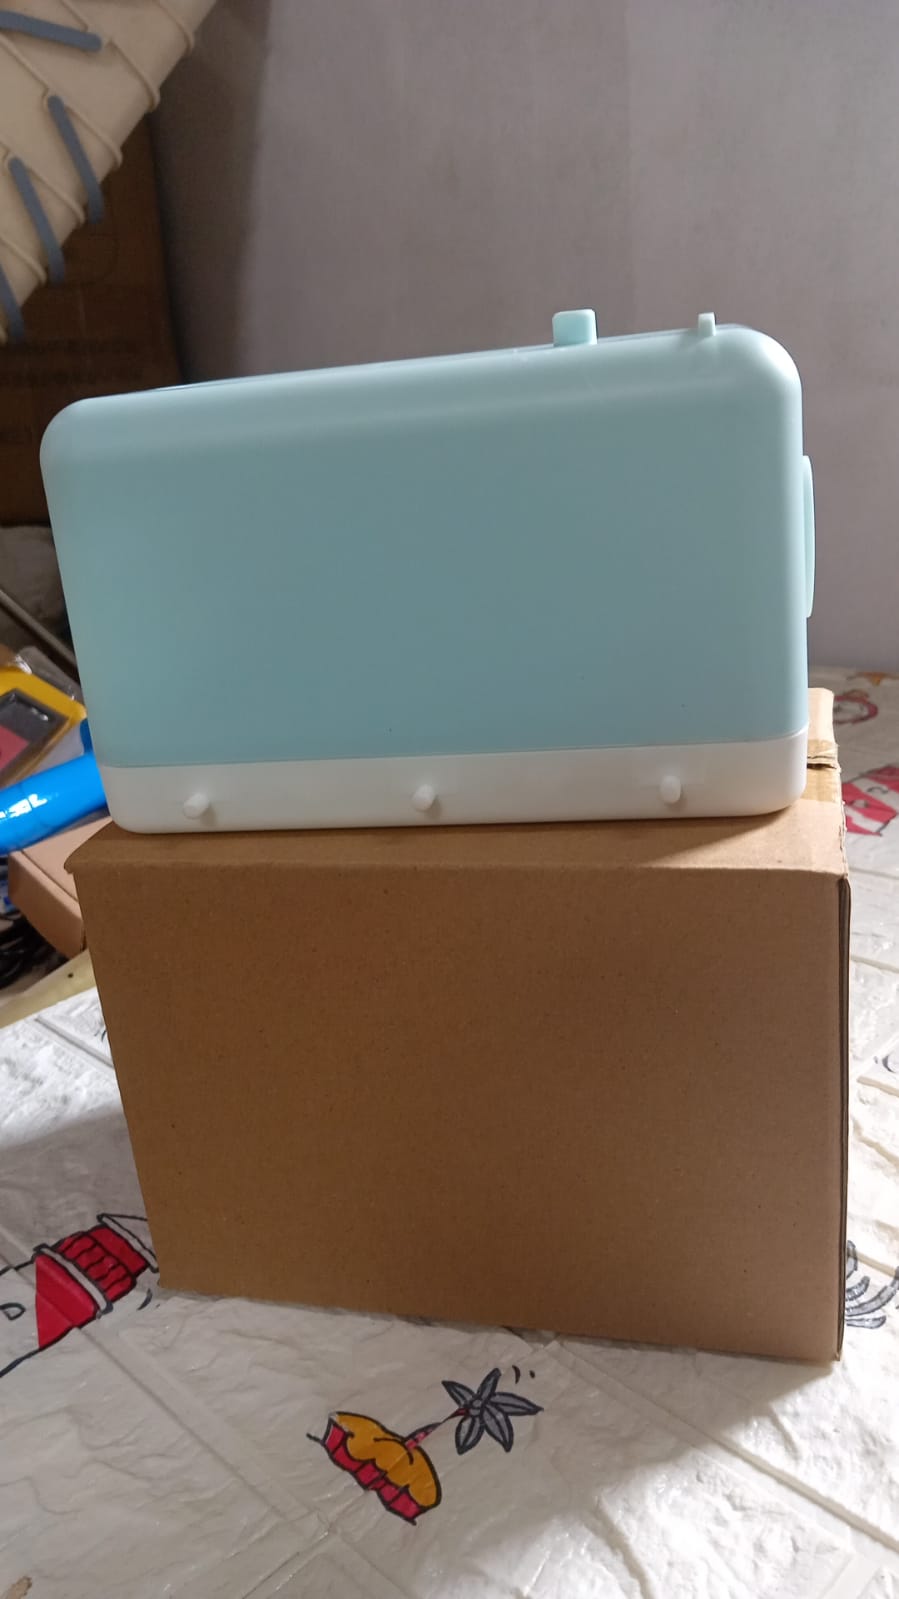 7547 Tissue Paper Holder Unique Train Engine Tissue Storage Box Tissue Paper Holder Box | Tissue Holder Dispenser Organizer for Car Decor & Home Use